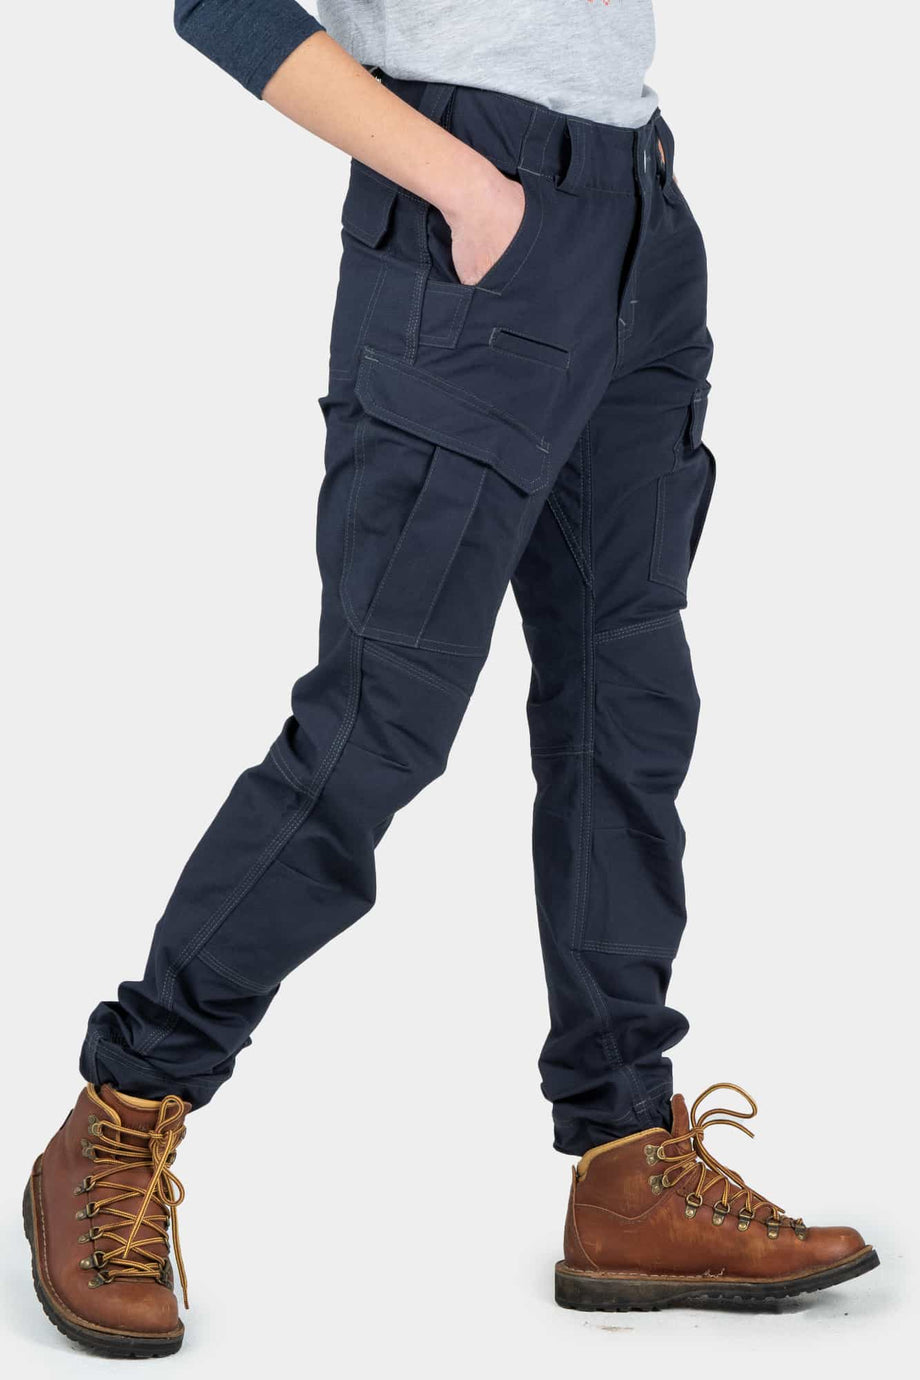 Lowes Ladies Stretch Navy Cargo Pocket Work Pant - Lowes Menswear